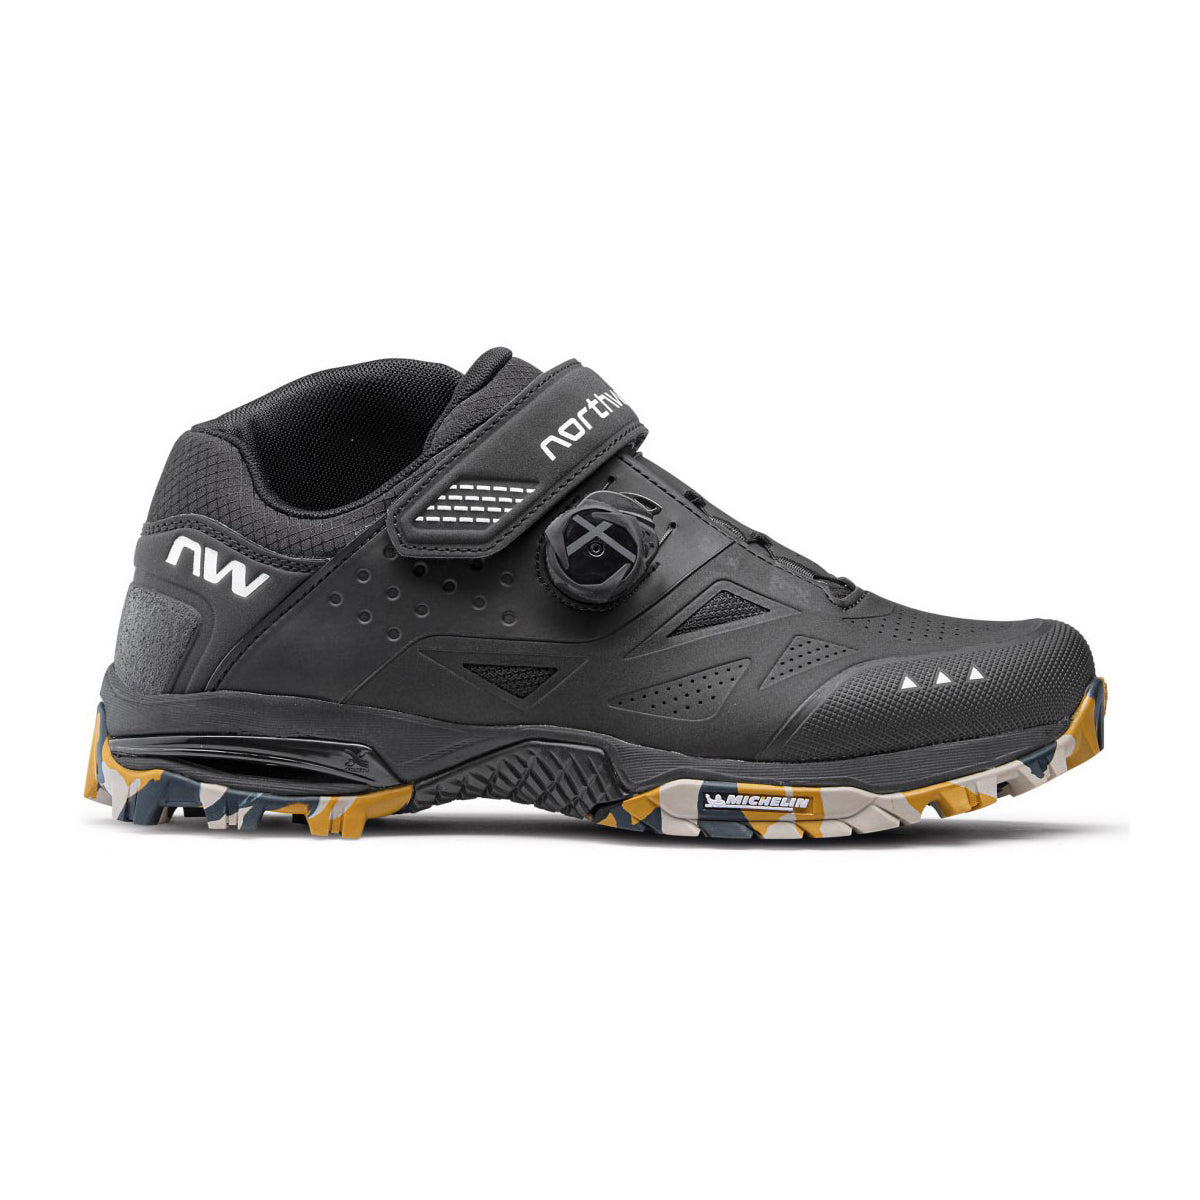 Northwave Enduro Mid 2 Shoes - EU 47 - Black - Camo Sole